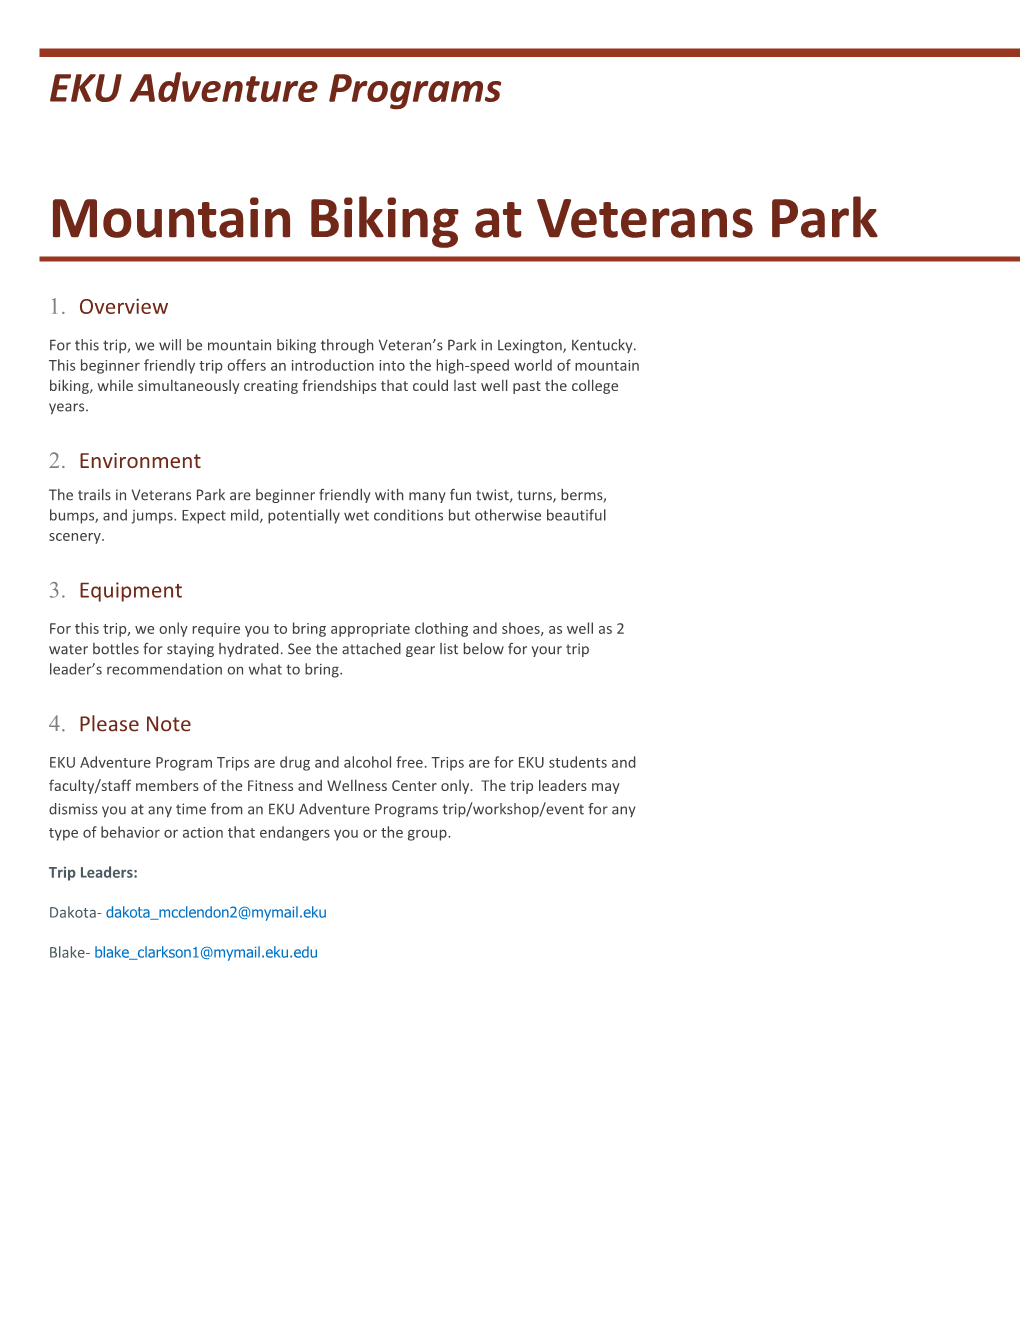 Mountain Biking at Veterans Park